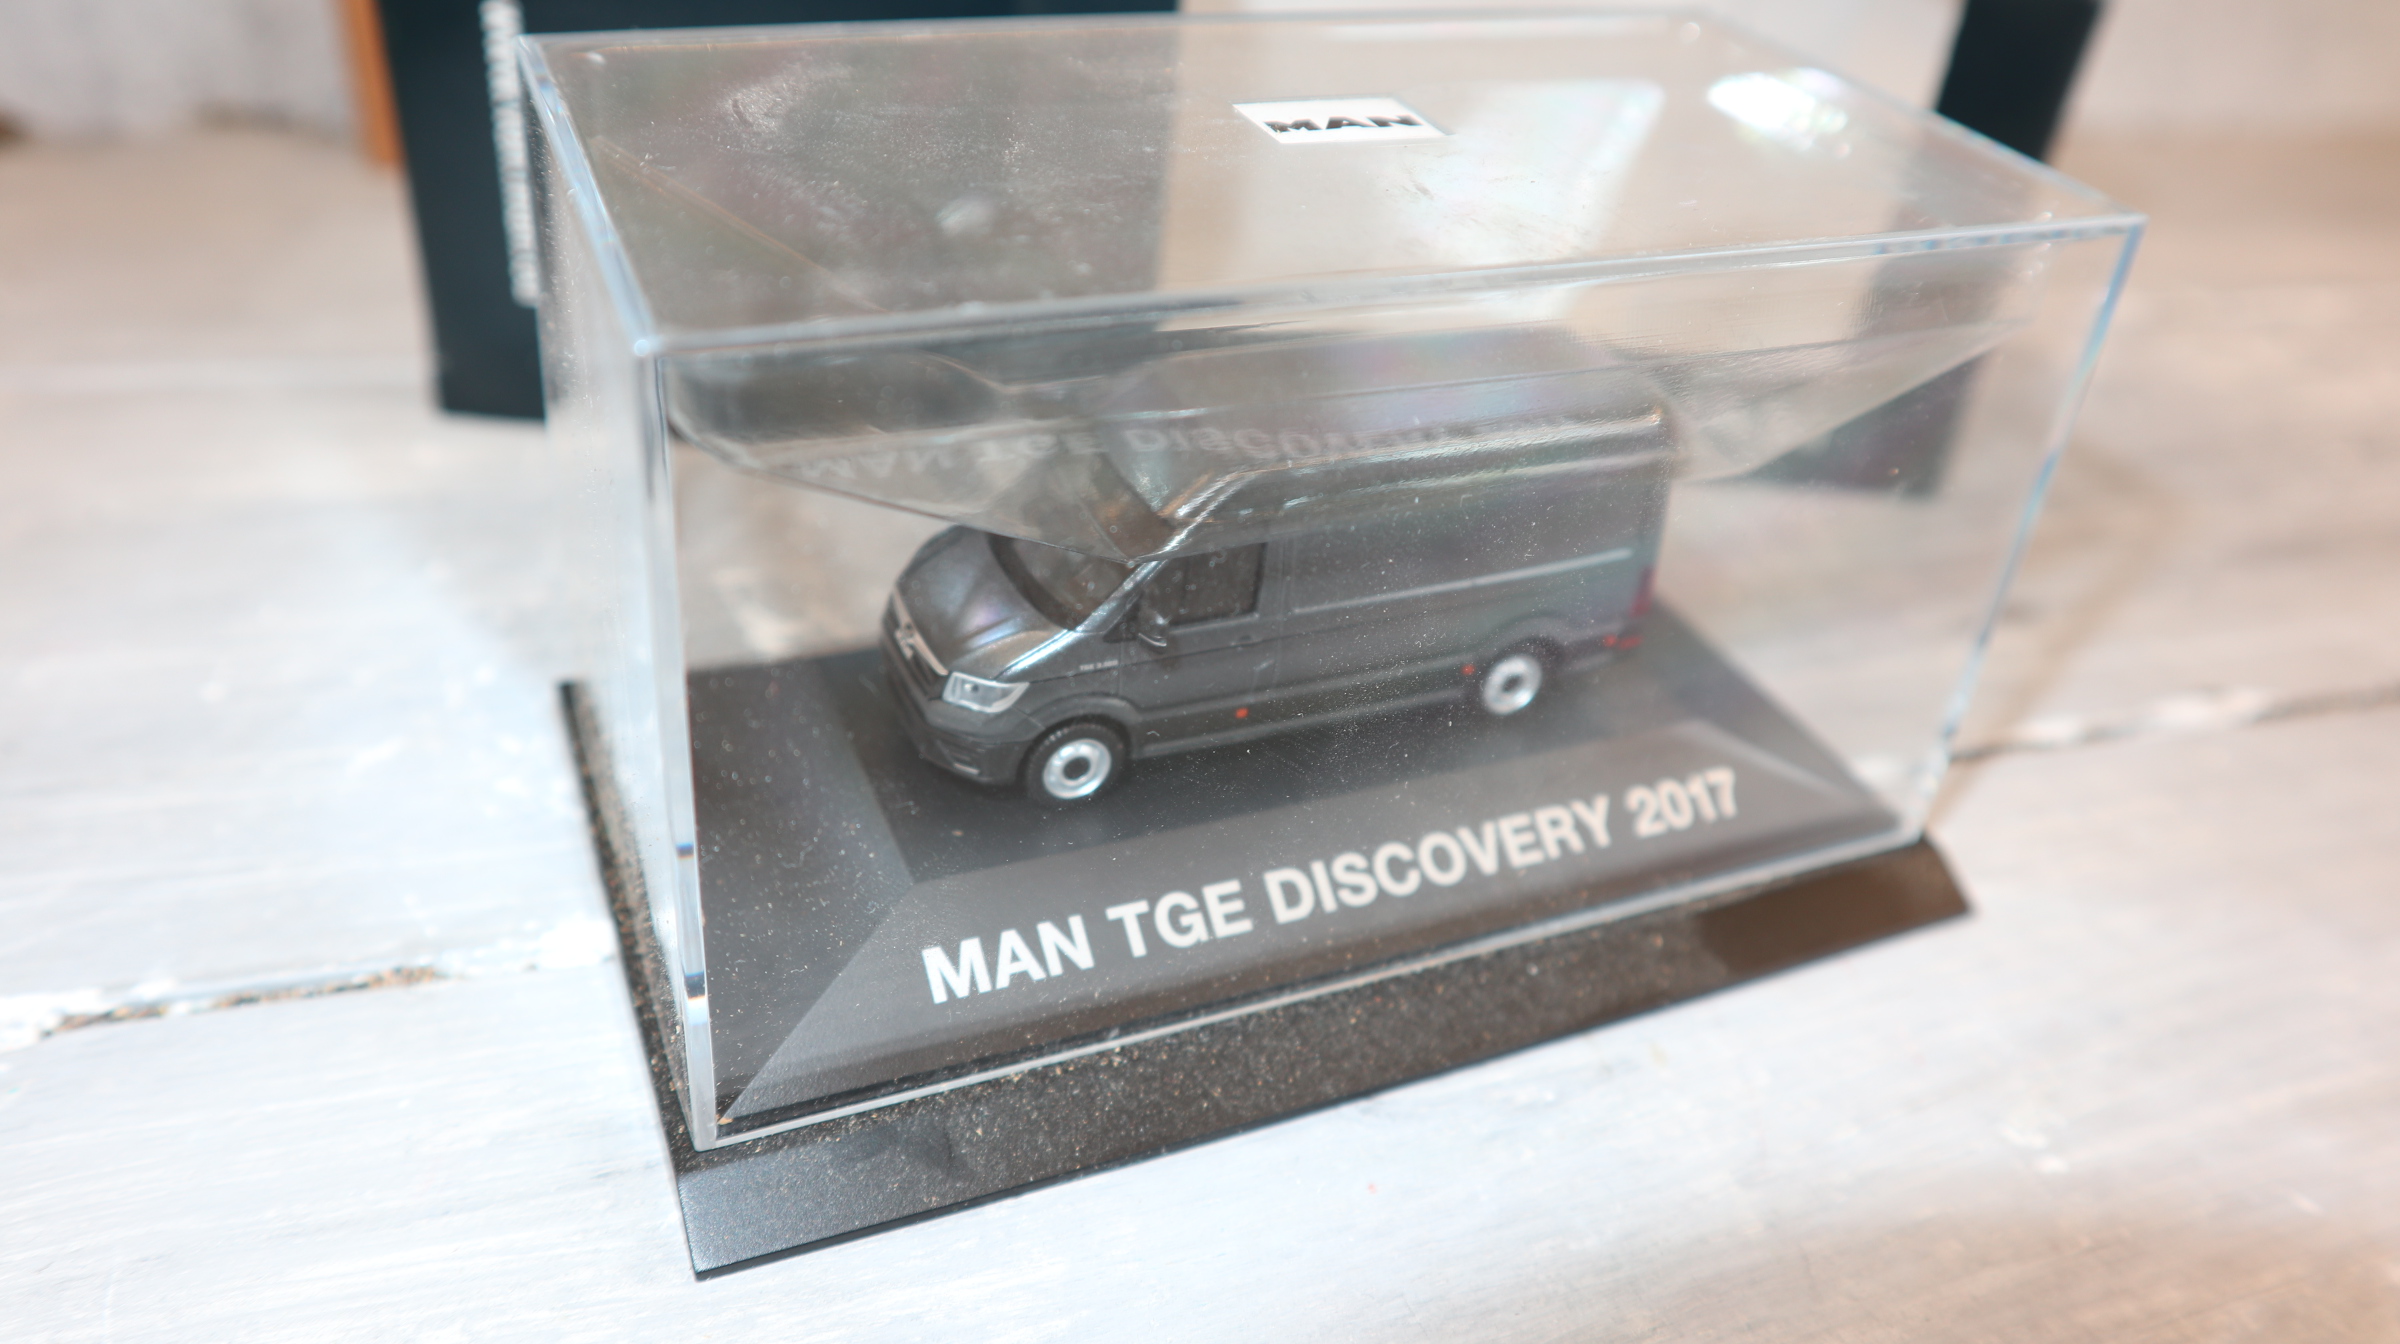 HERPA  in 1:87 , Sondermodell  MAN TGE 3.180  Kastenwagen,  Discovery Tour 2017, NEU in OVP